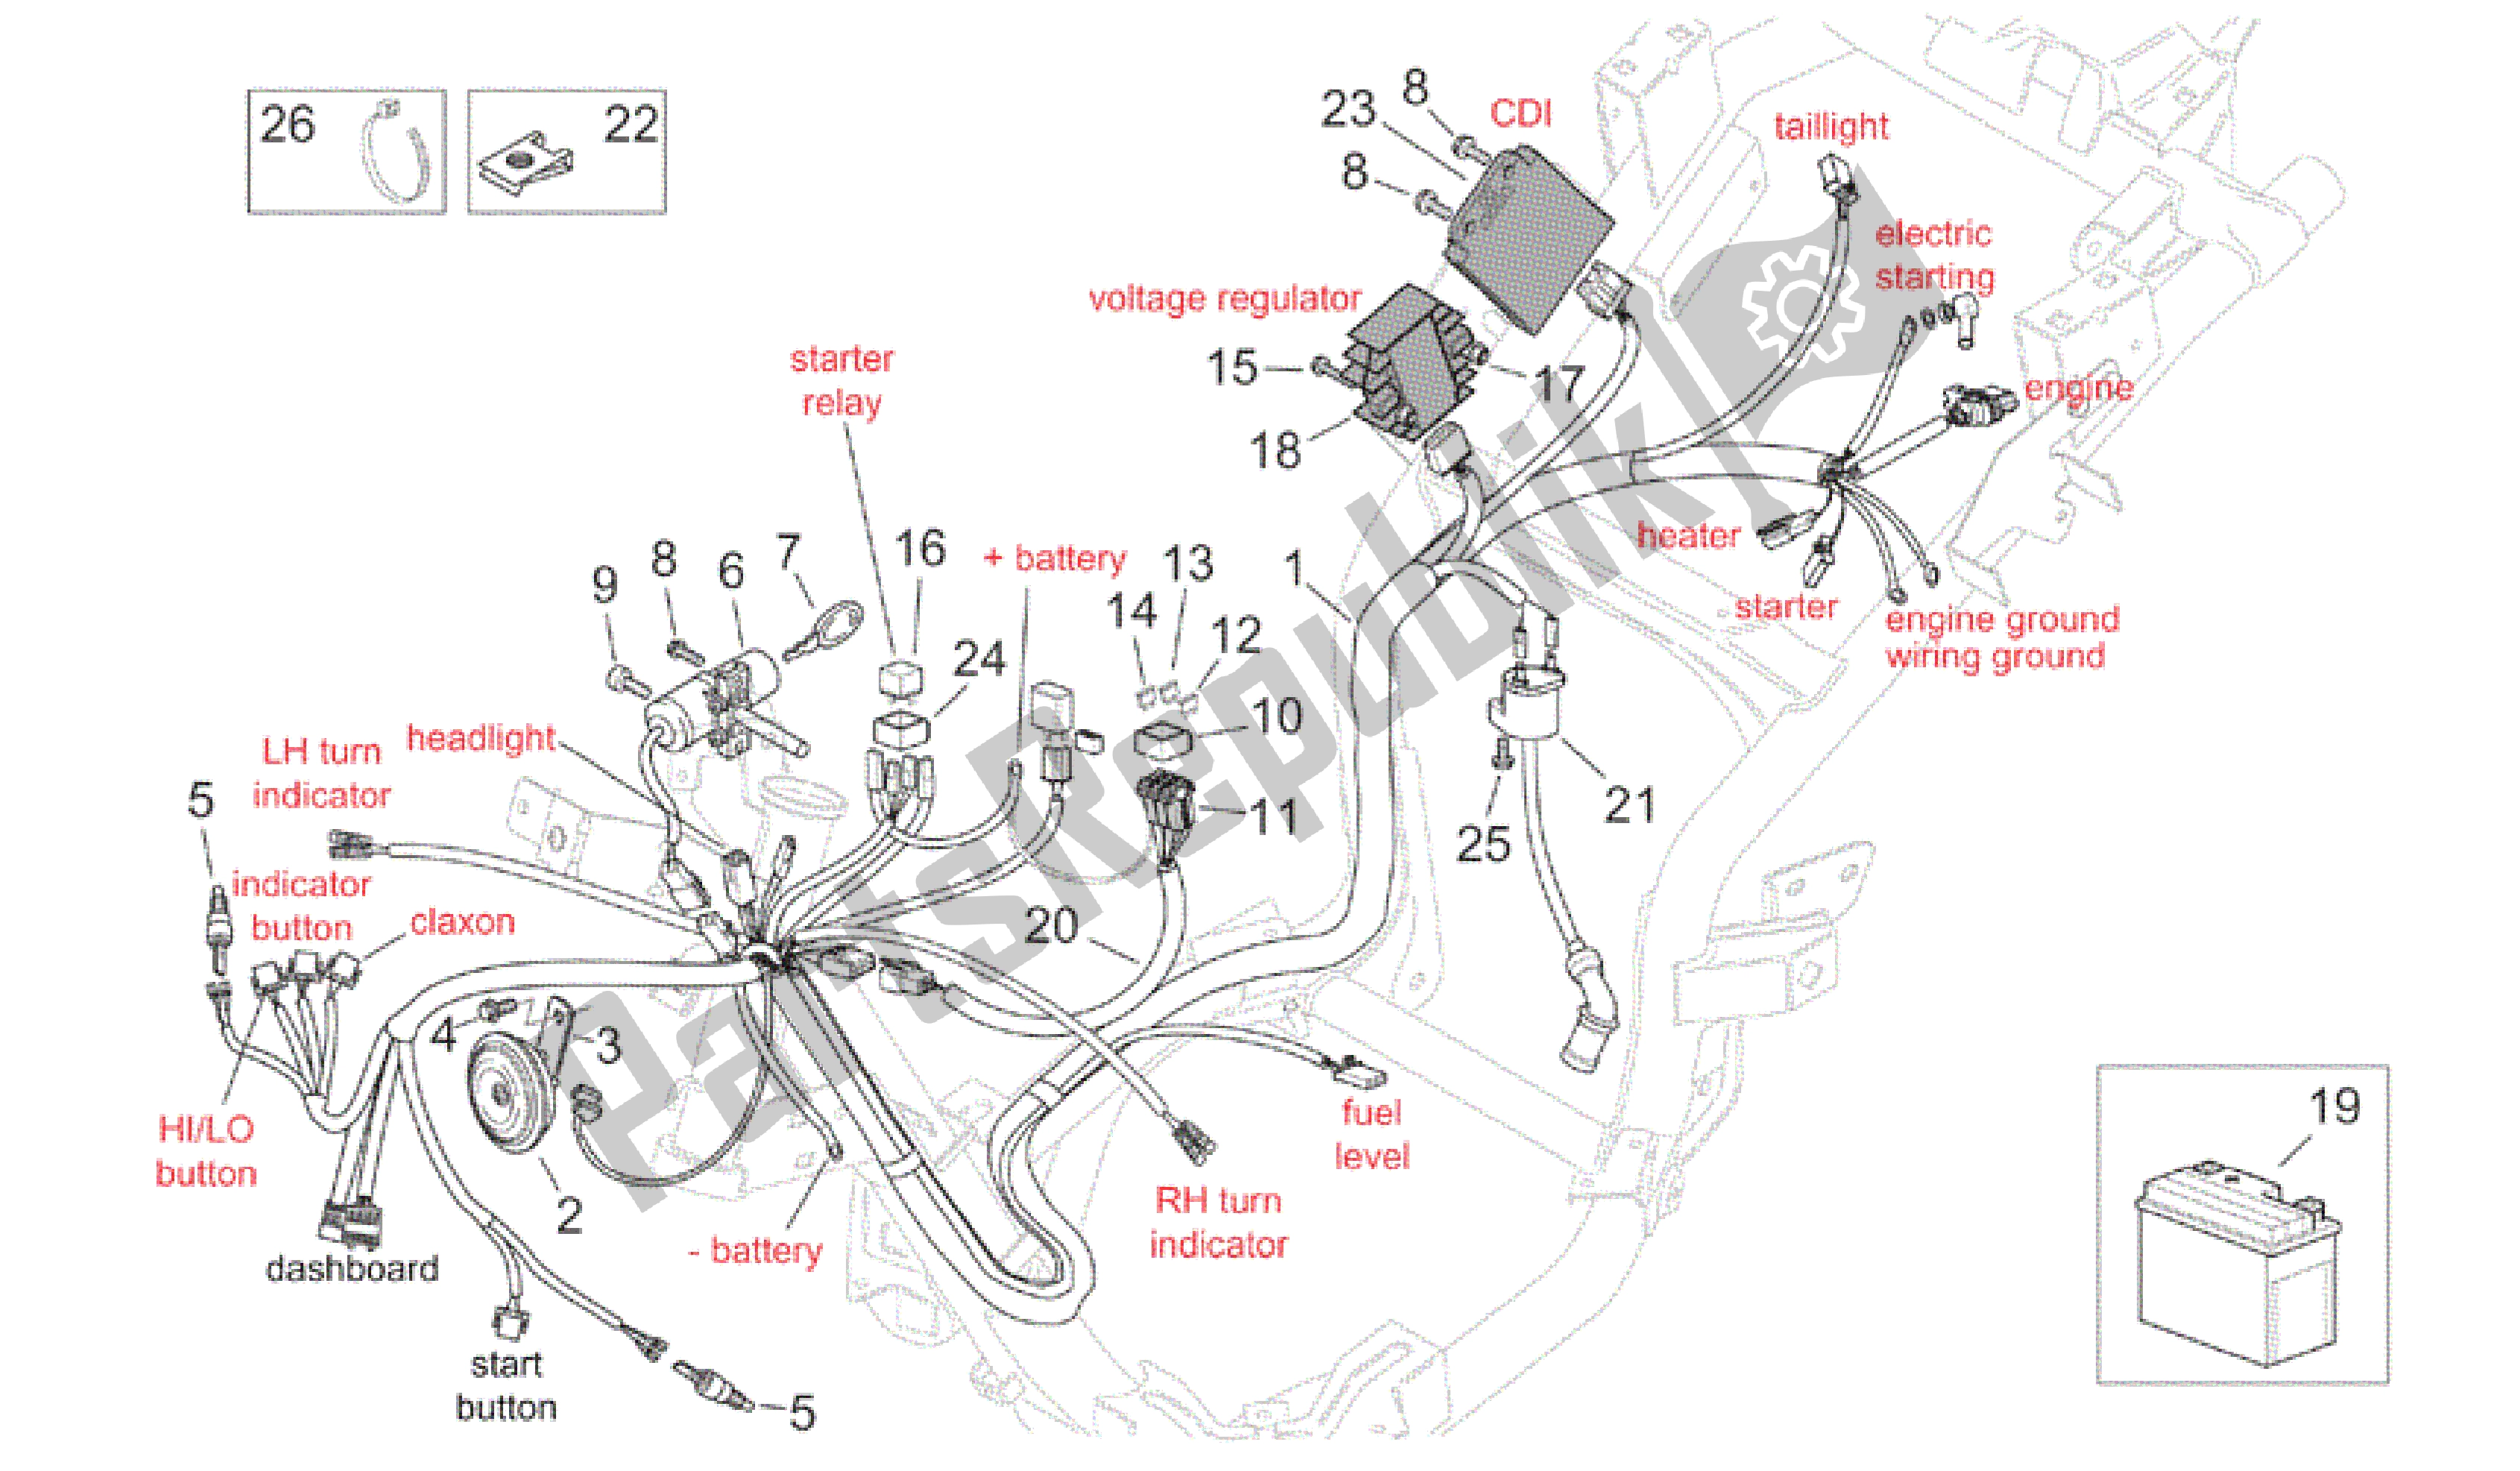 All parts for the Electrical System - Retro' of the Aprilia Mojito 125 2003 - 2007